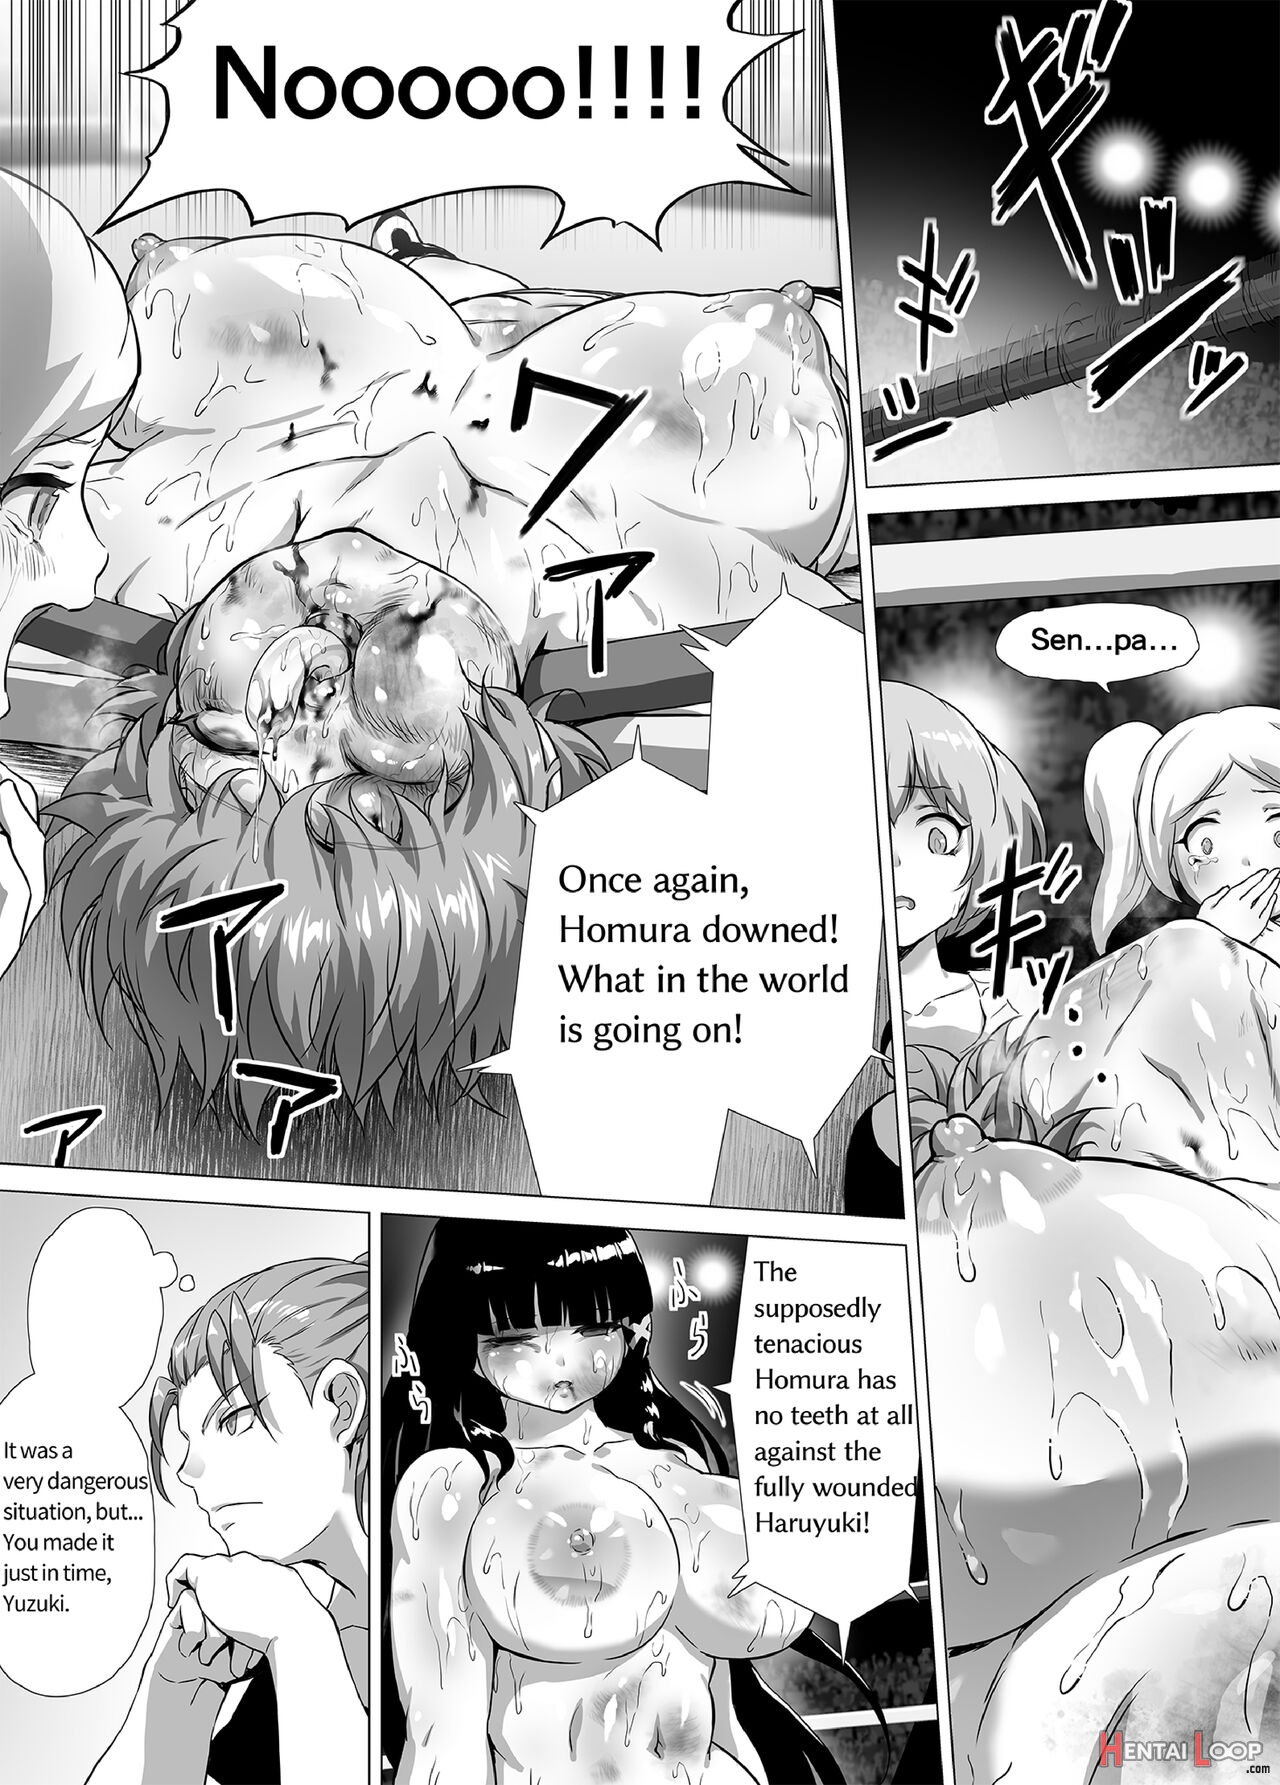 Mahiro Standup! Manga Ver. ~an New Foe Appears! Meet The Lovely Yuzuki~ page 52